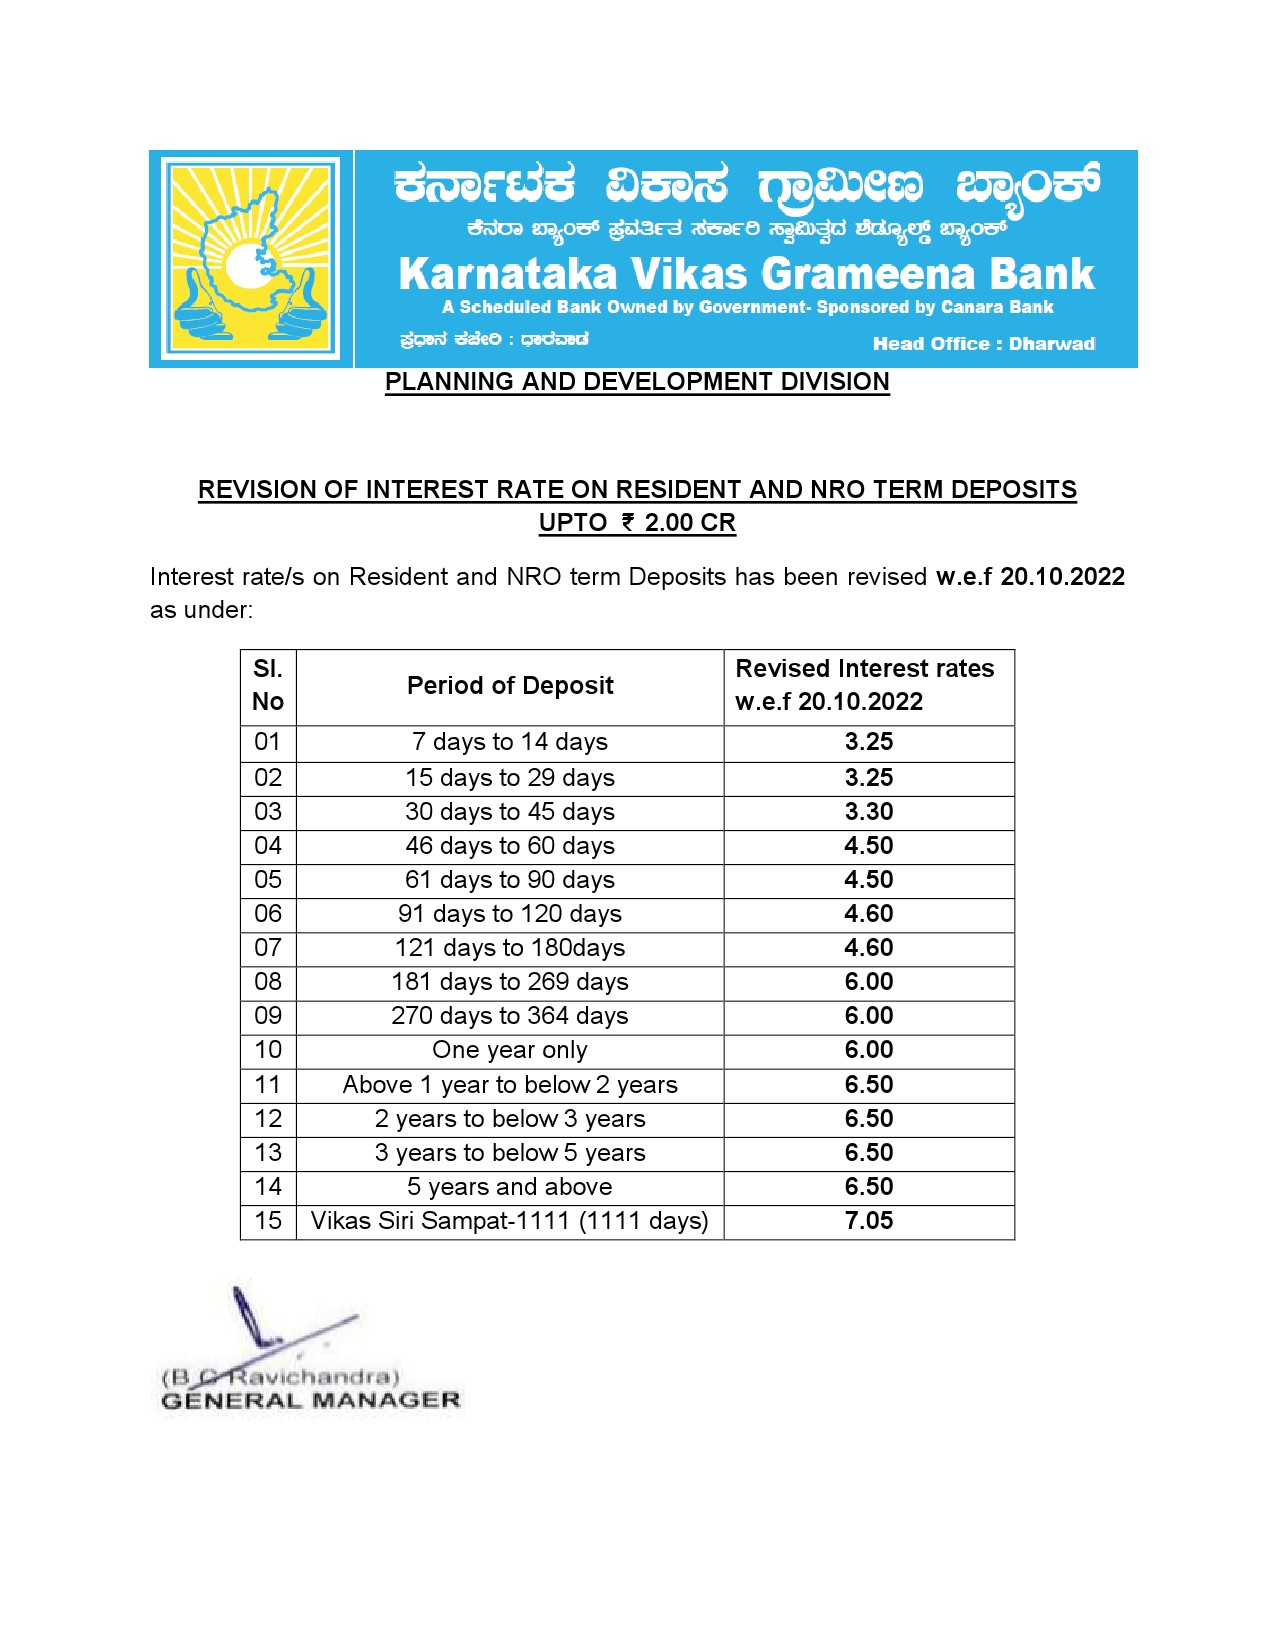 Fixed Deposit Interest Rates of Karnataka Vikas Gramin Bank - Image 1